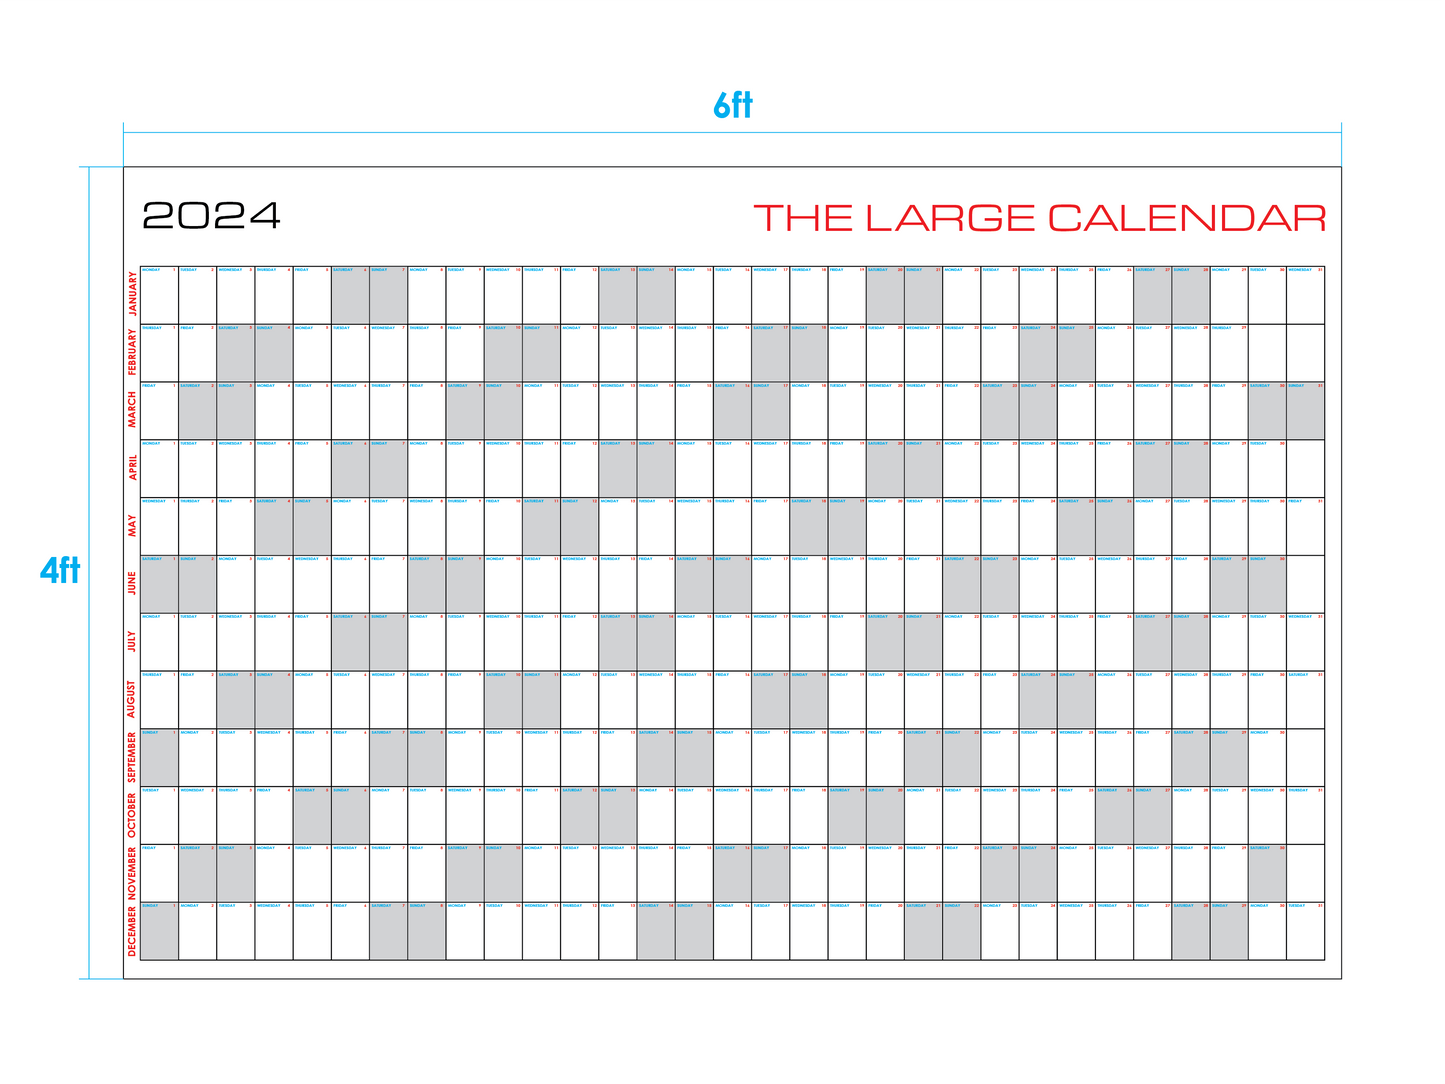 The Large Calendar